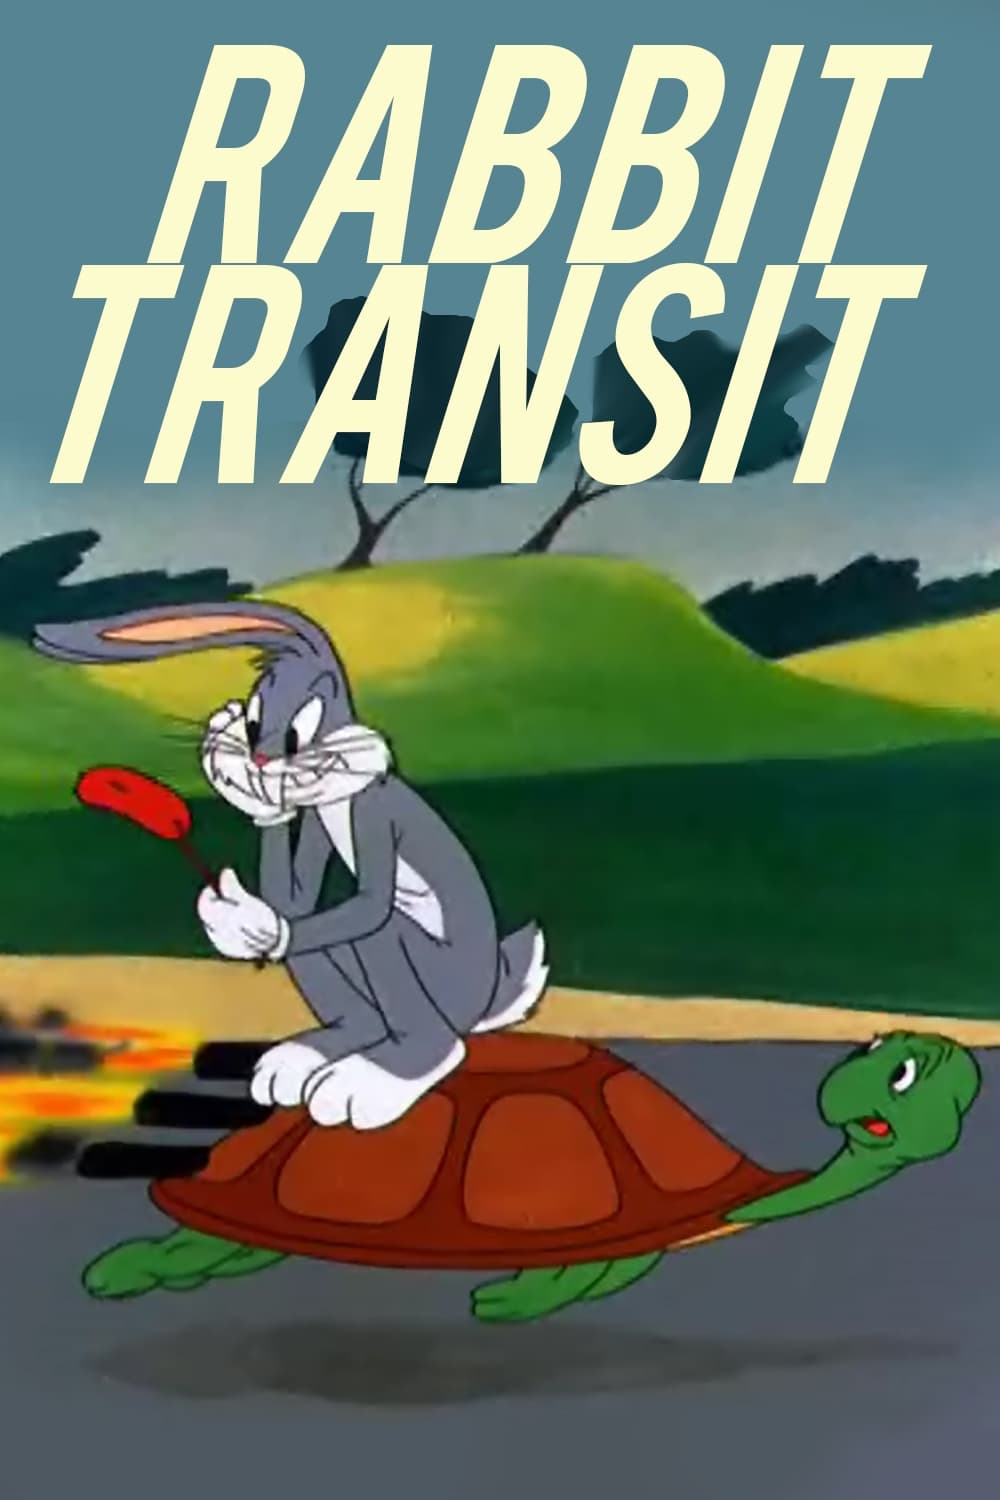 Rabbit Transit (1947)